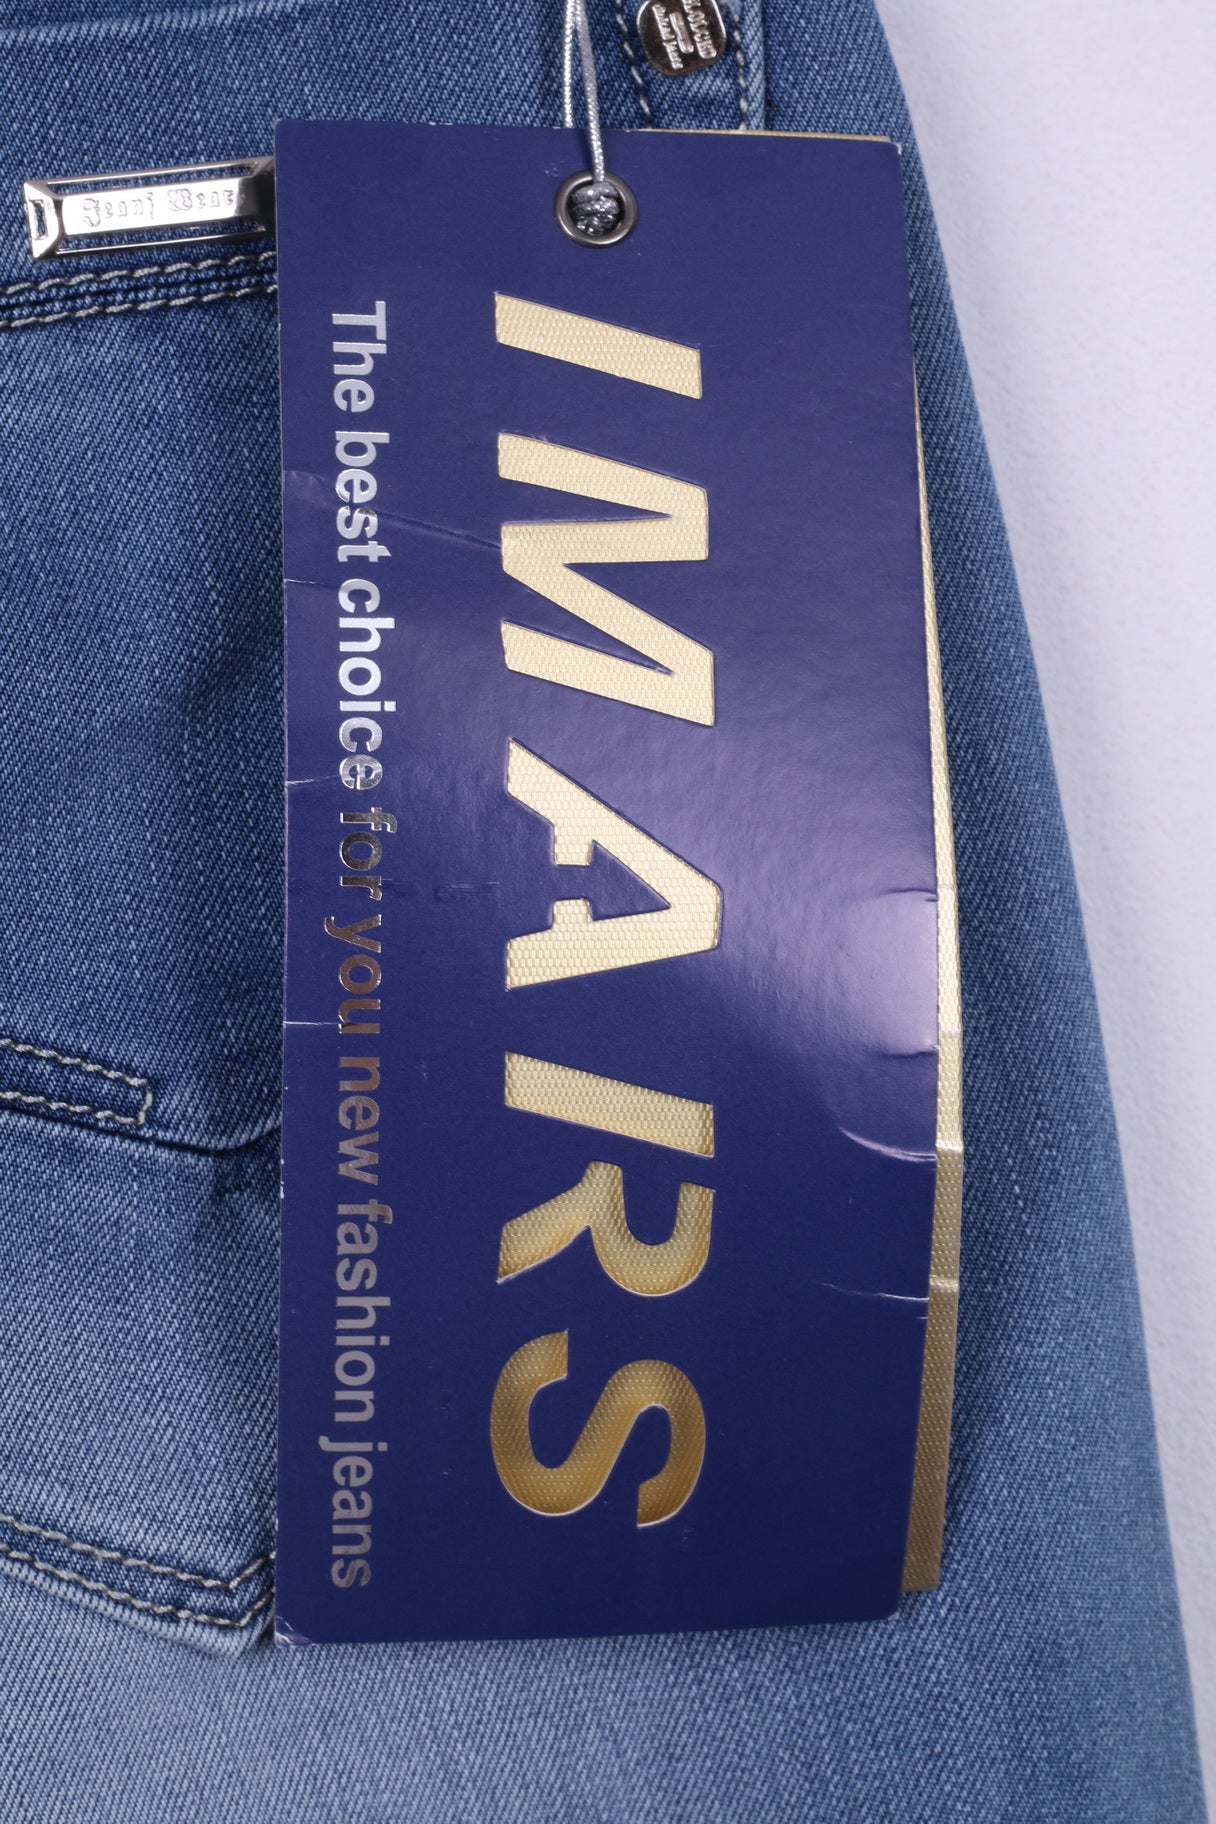 Nouveau Imars jean Denim mode femme 29 pantalon jean coton bleu